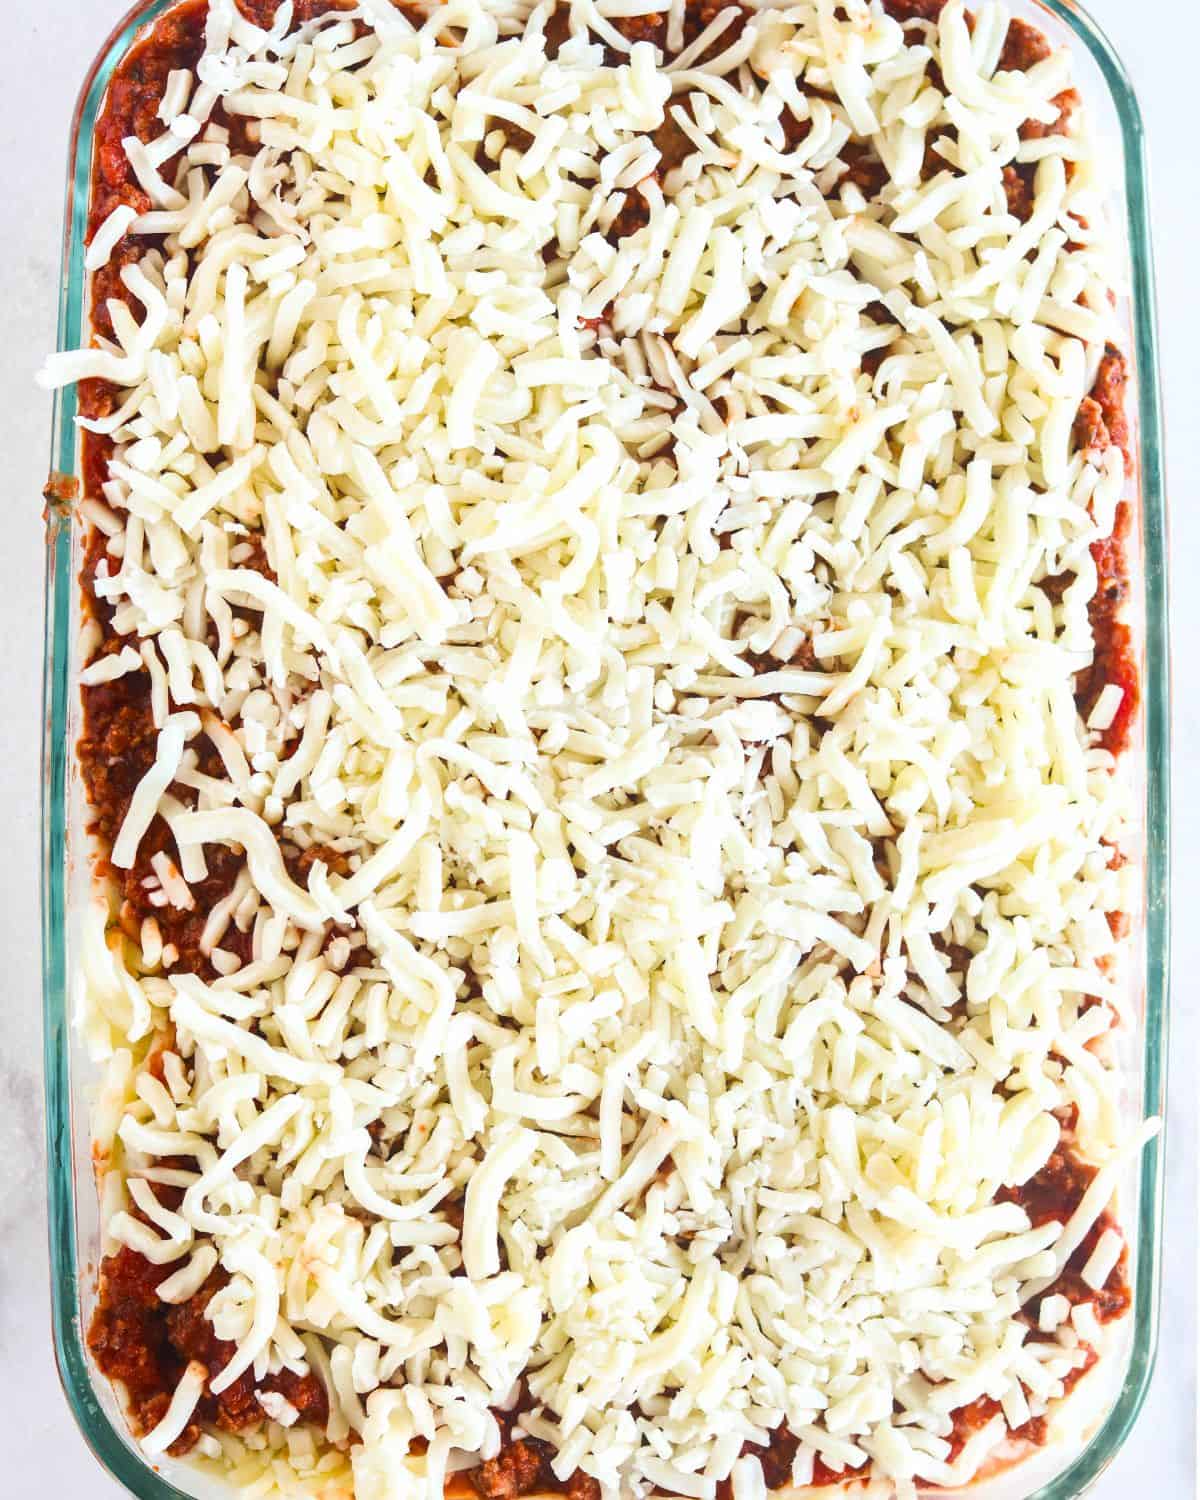 unbaked lasagna.